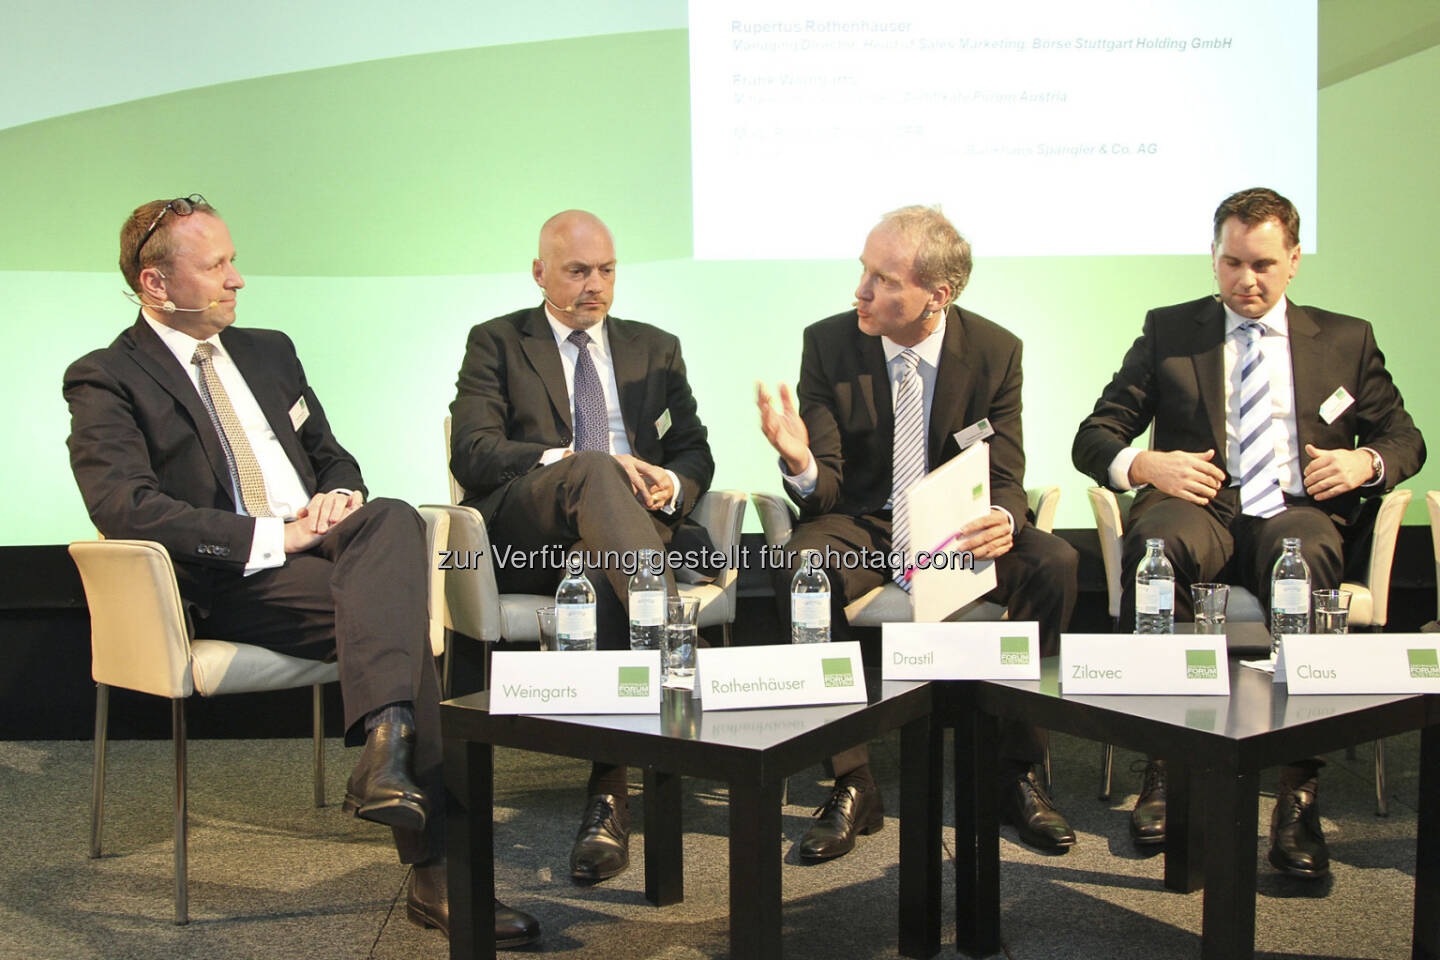 Roundtable: Frank Weingarts (UniCredit), Rupertus Rothenhäuser (Börse Stuttgart), Christian Drastil, Ronald Zilavec (Bankhaus Spängler)